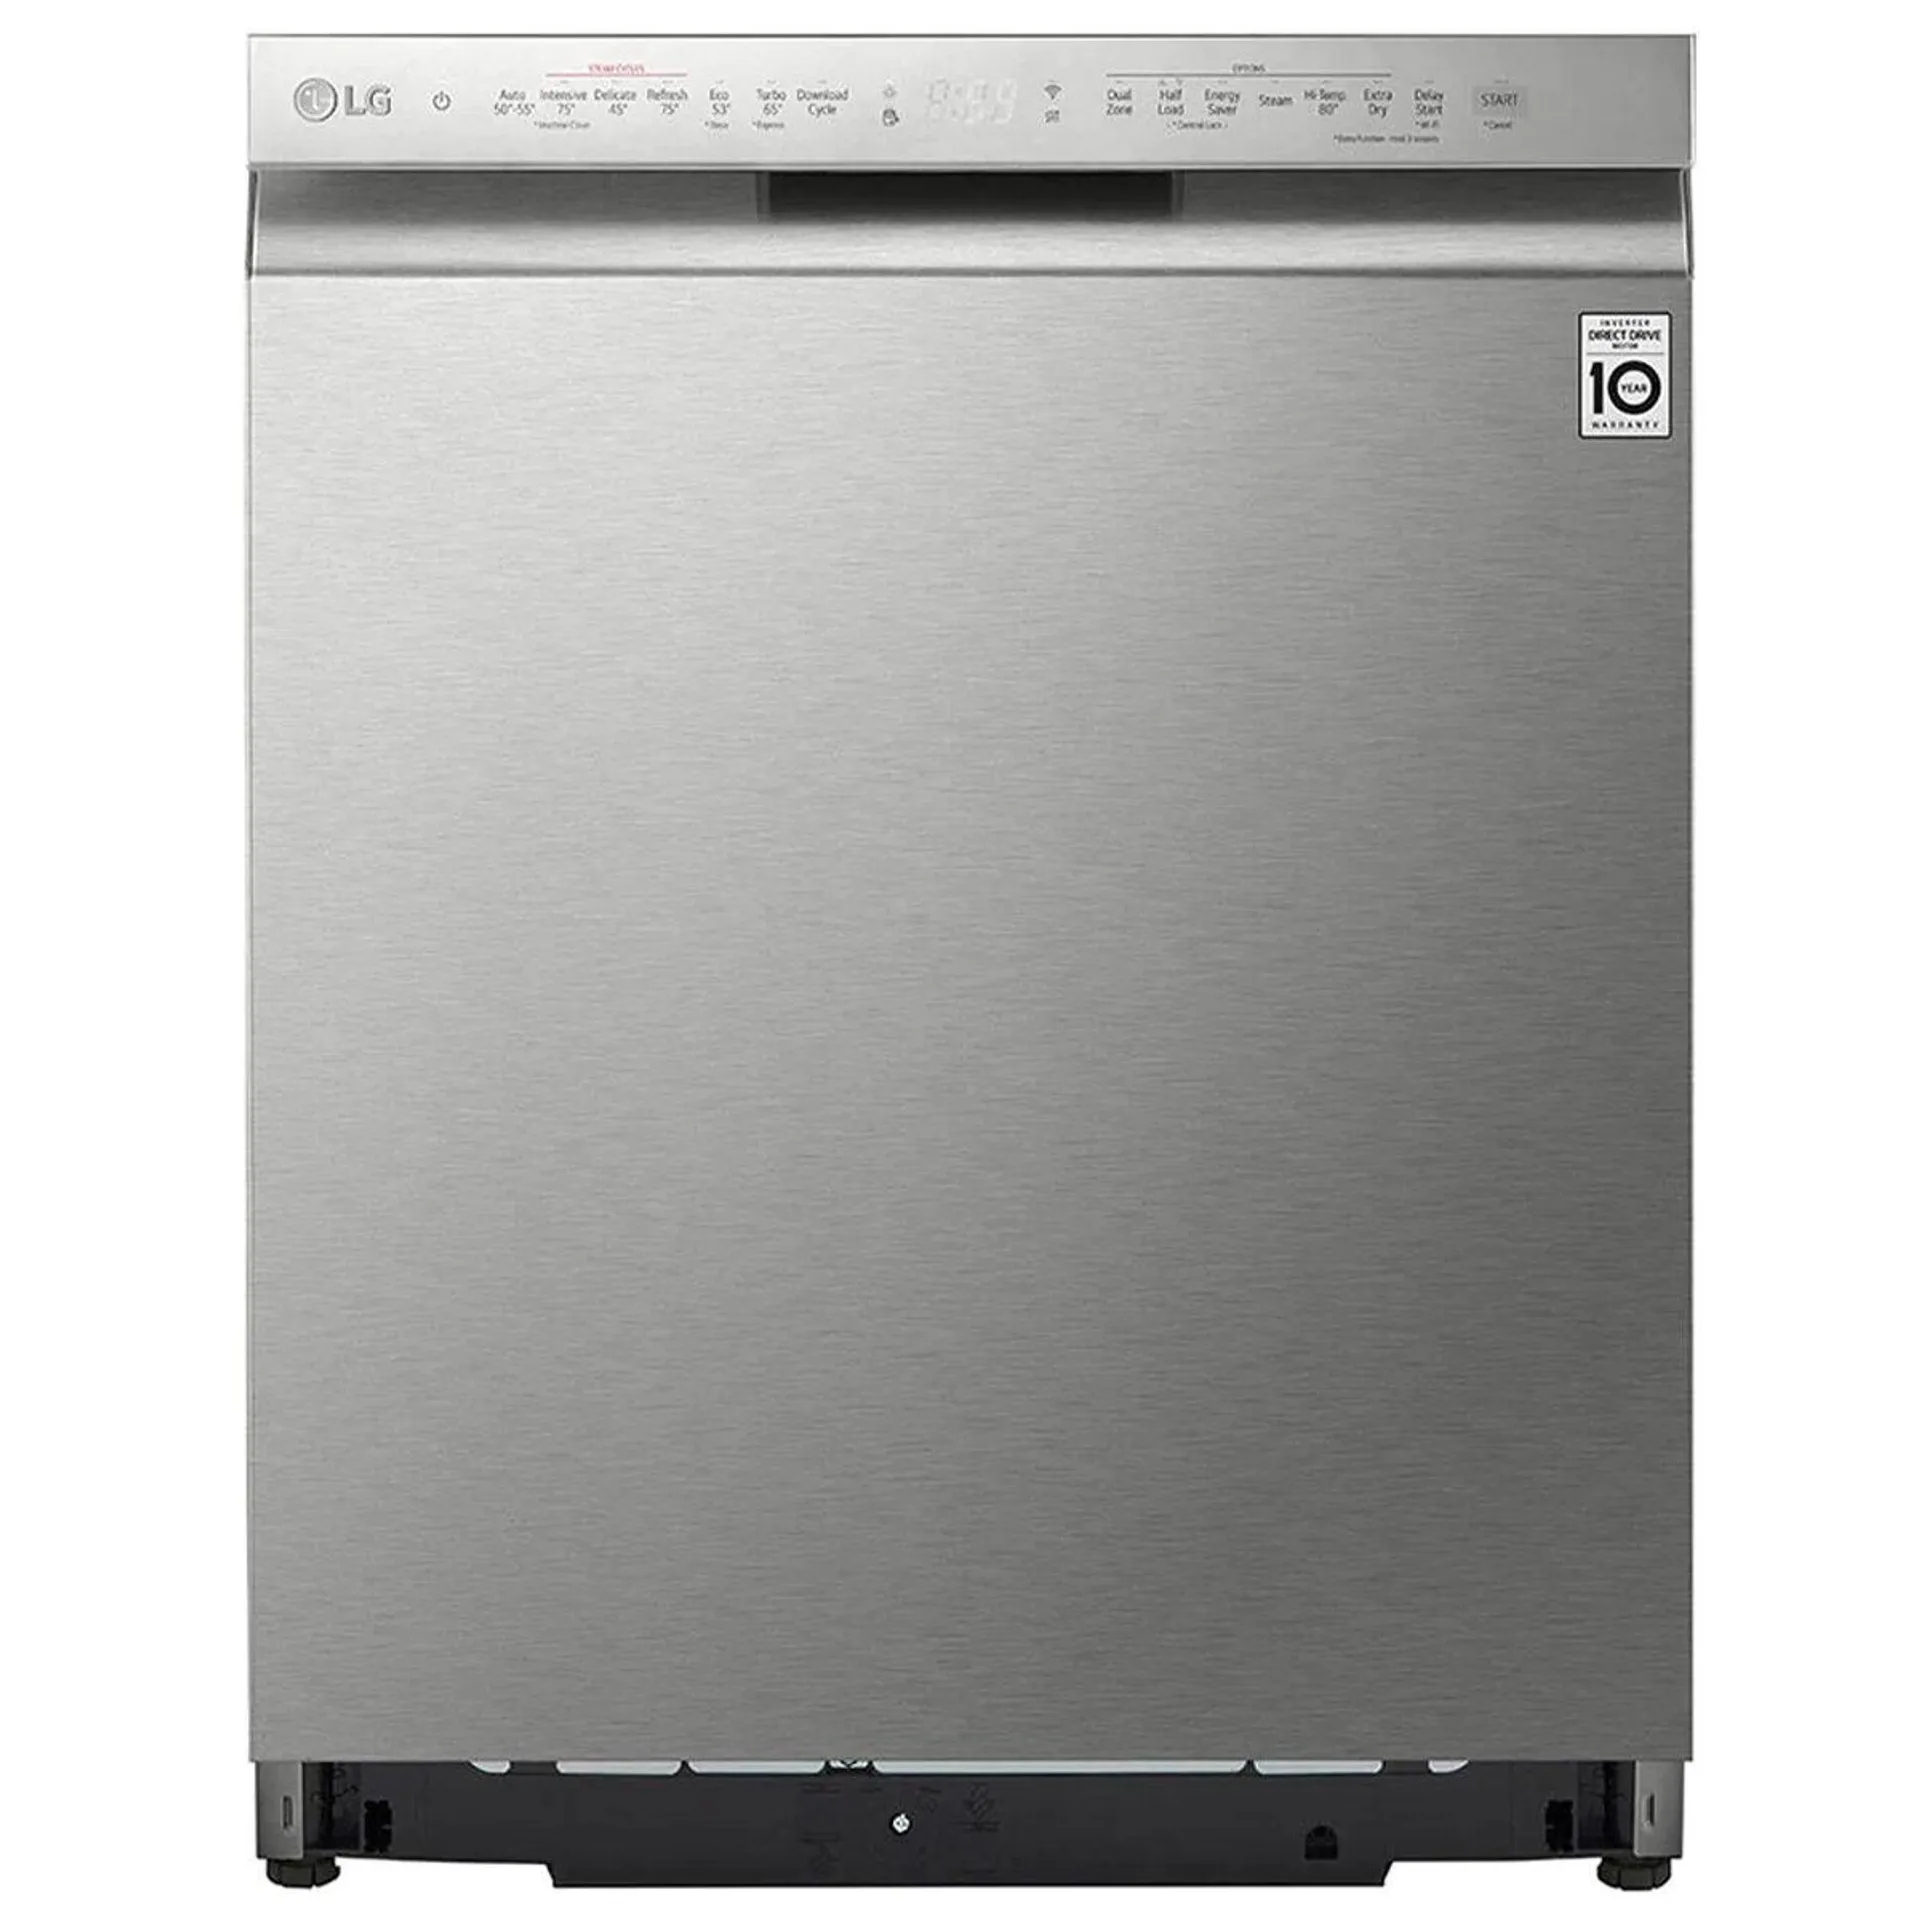 LG 14 Place QuadWash Built Under Dishwasher XD4B24UPS